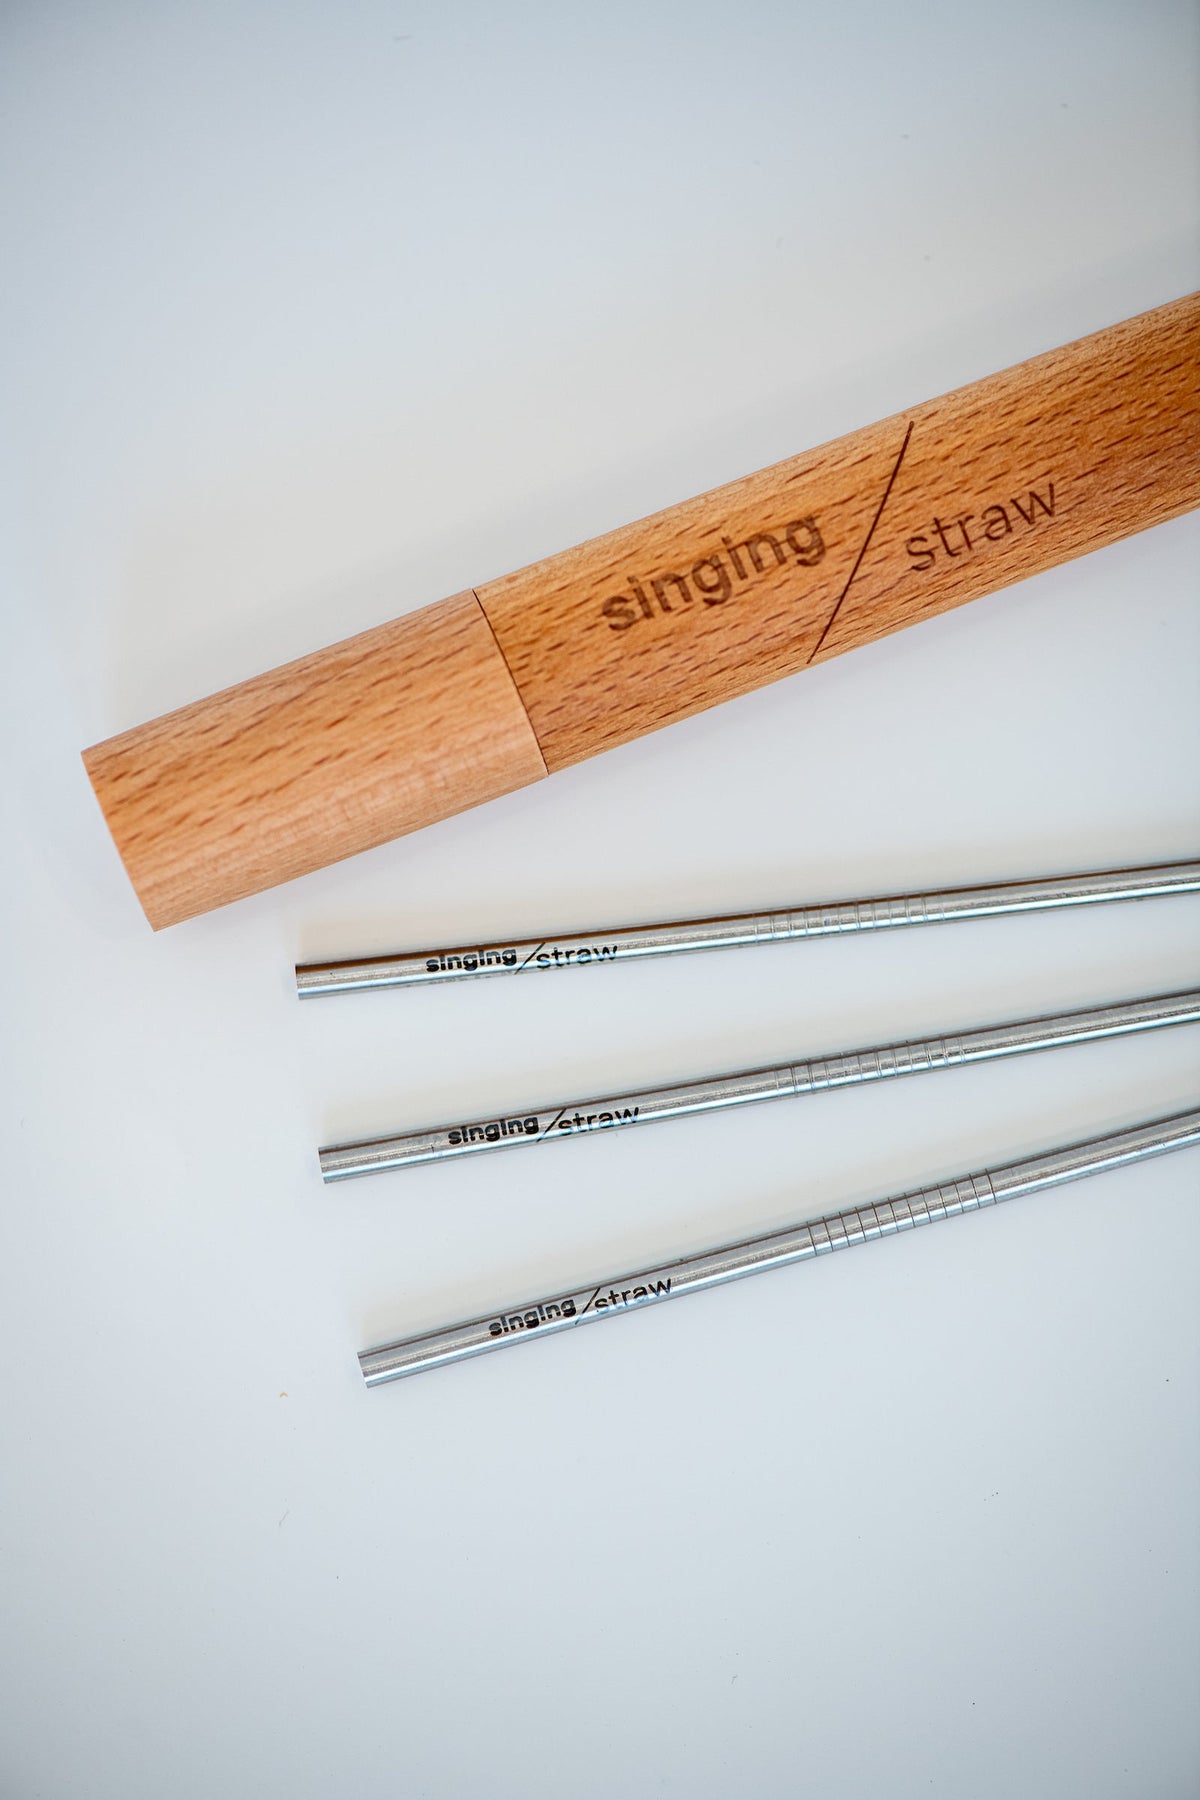 Singing / Straw